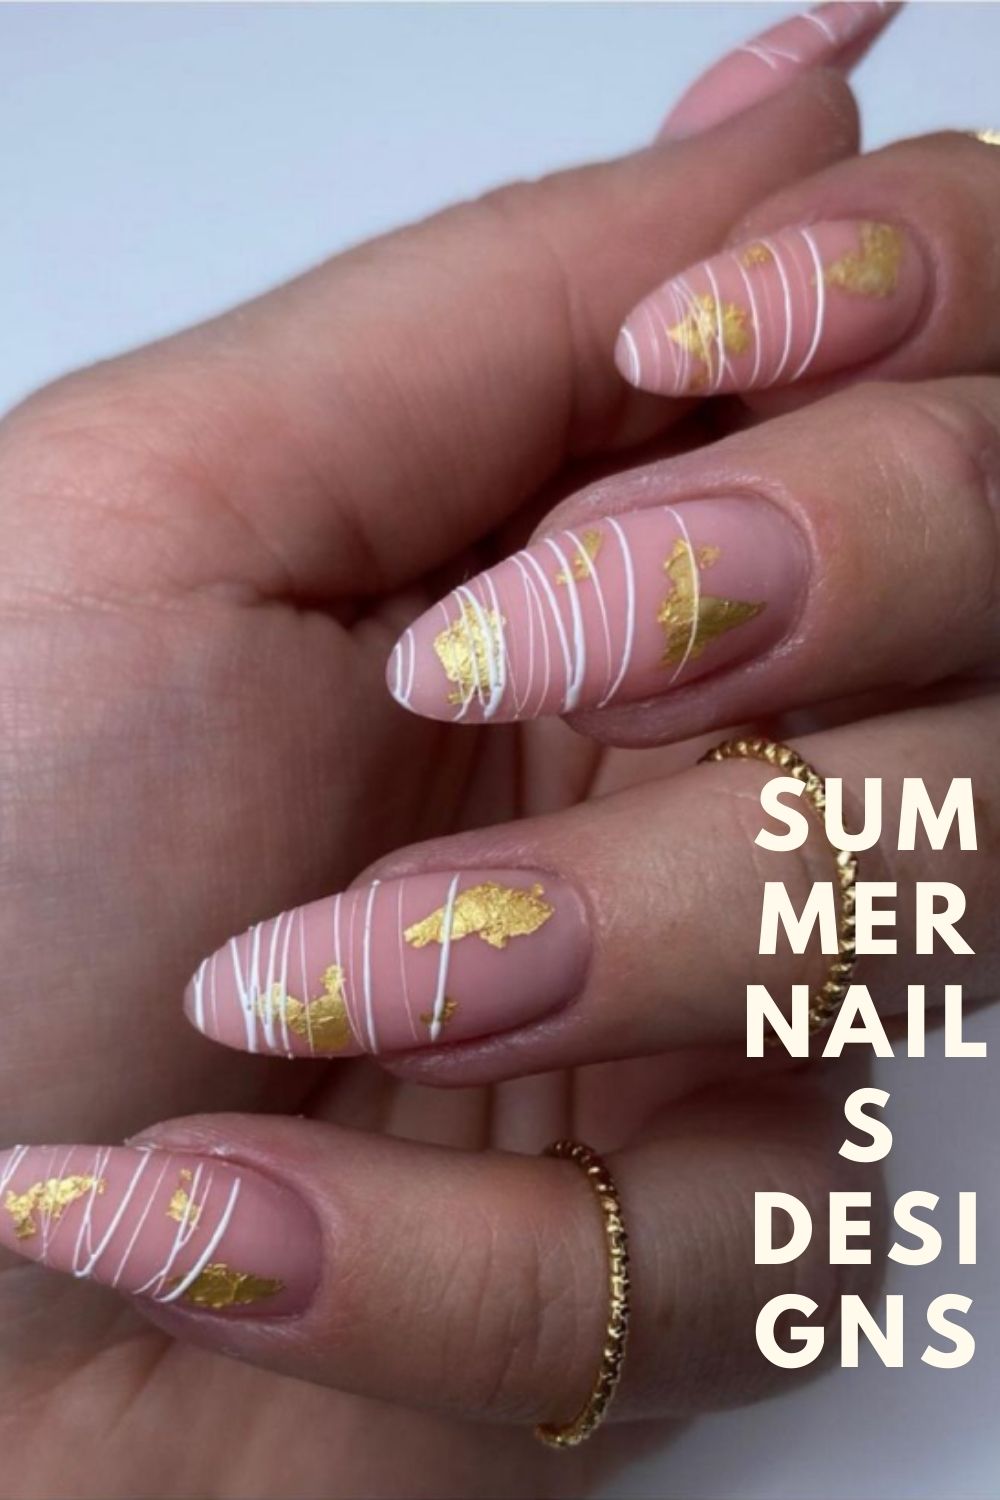 Classy almond nails ideas